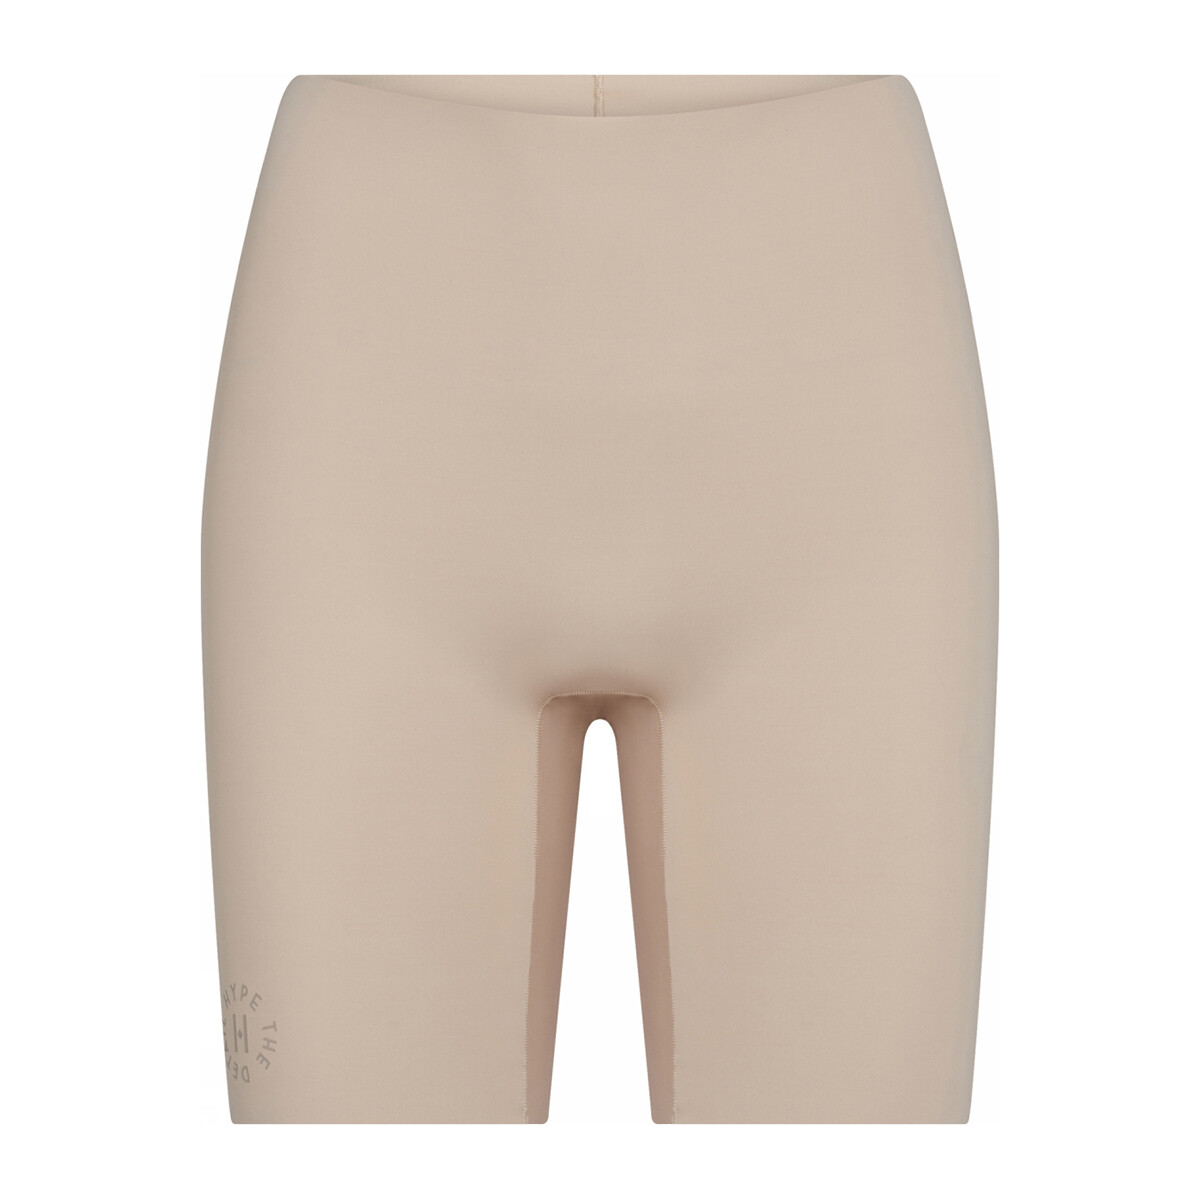 Hype The Detail Essentials Shorts, Farve: Beige, Størrelse: XXL, Dame